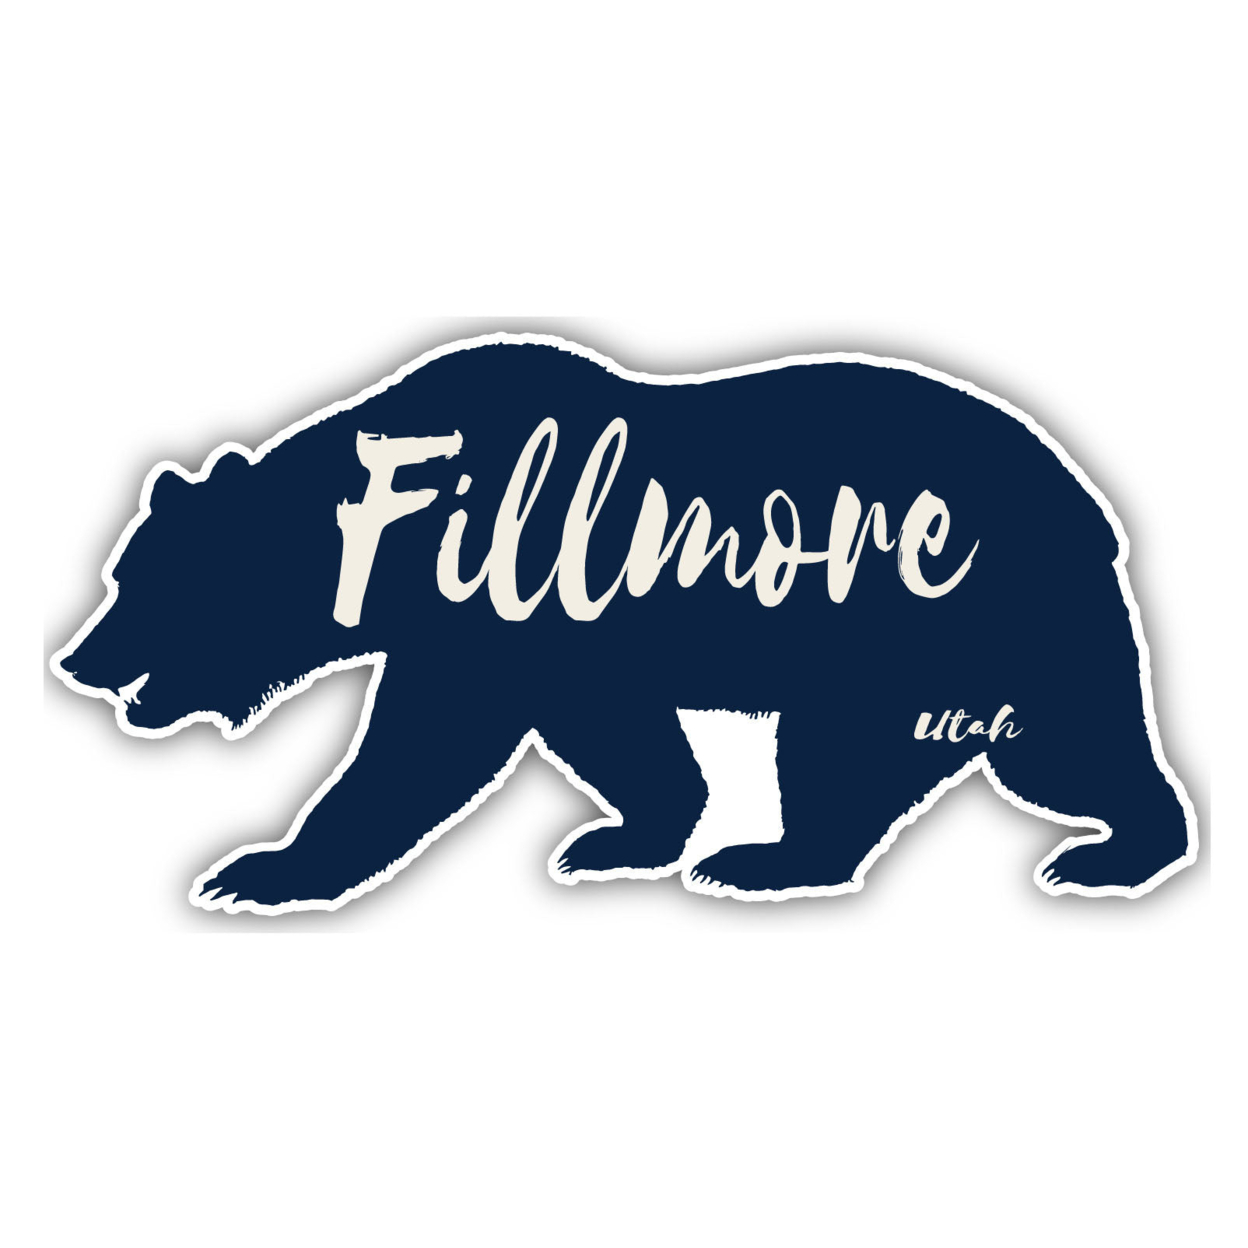 Fillmore Utah Souvenir Decorative Stickers (Choose Theme And Size) - Single Unit, 8-Inch, Bear